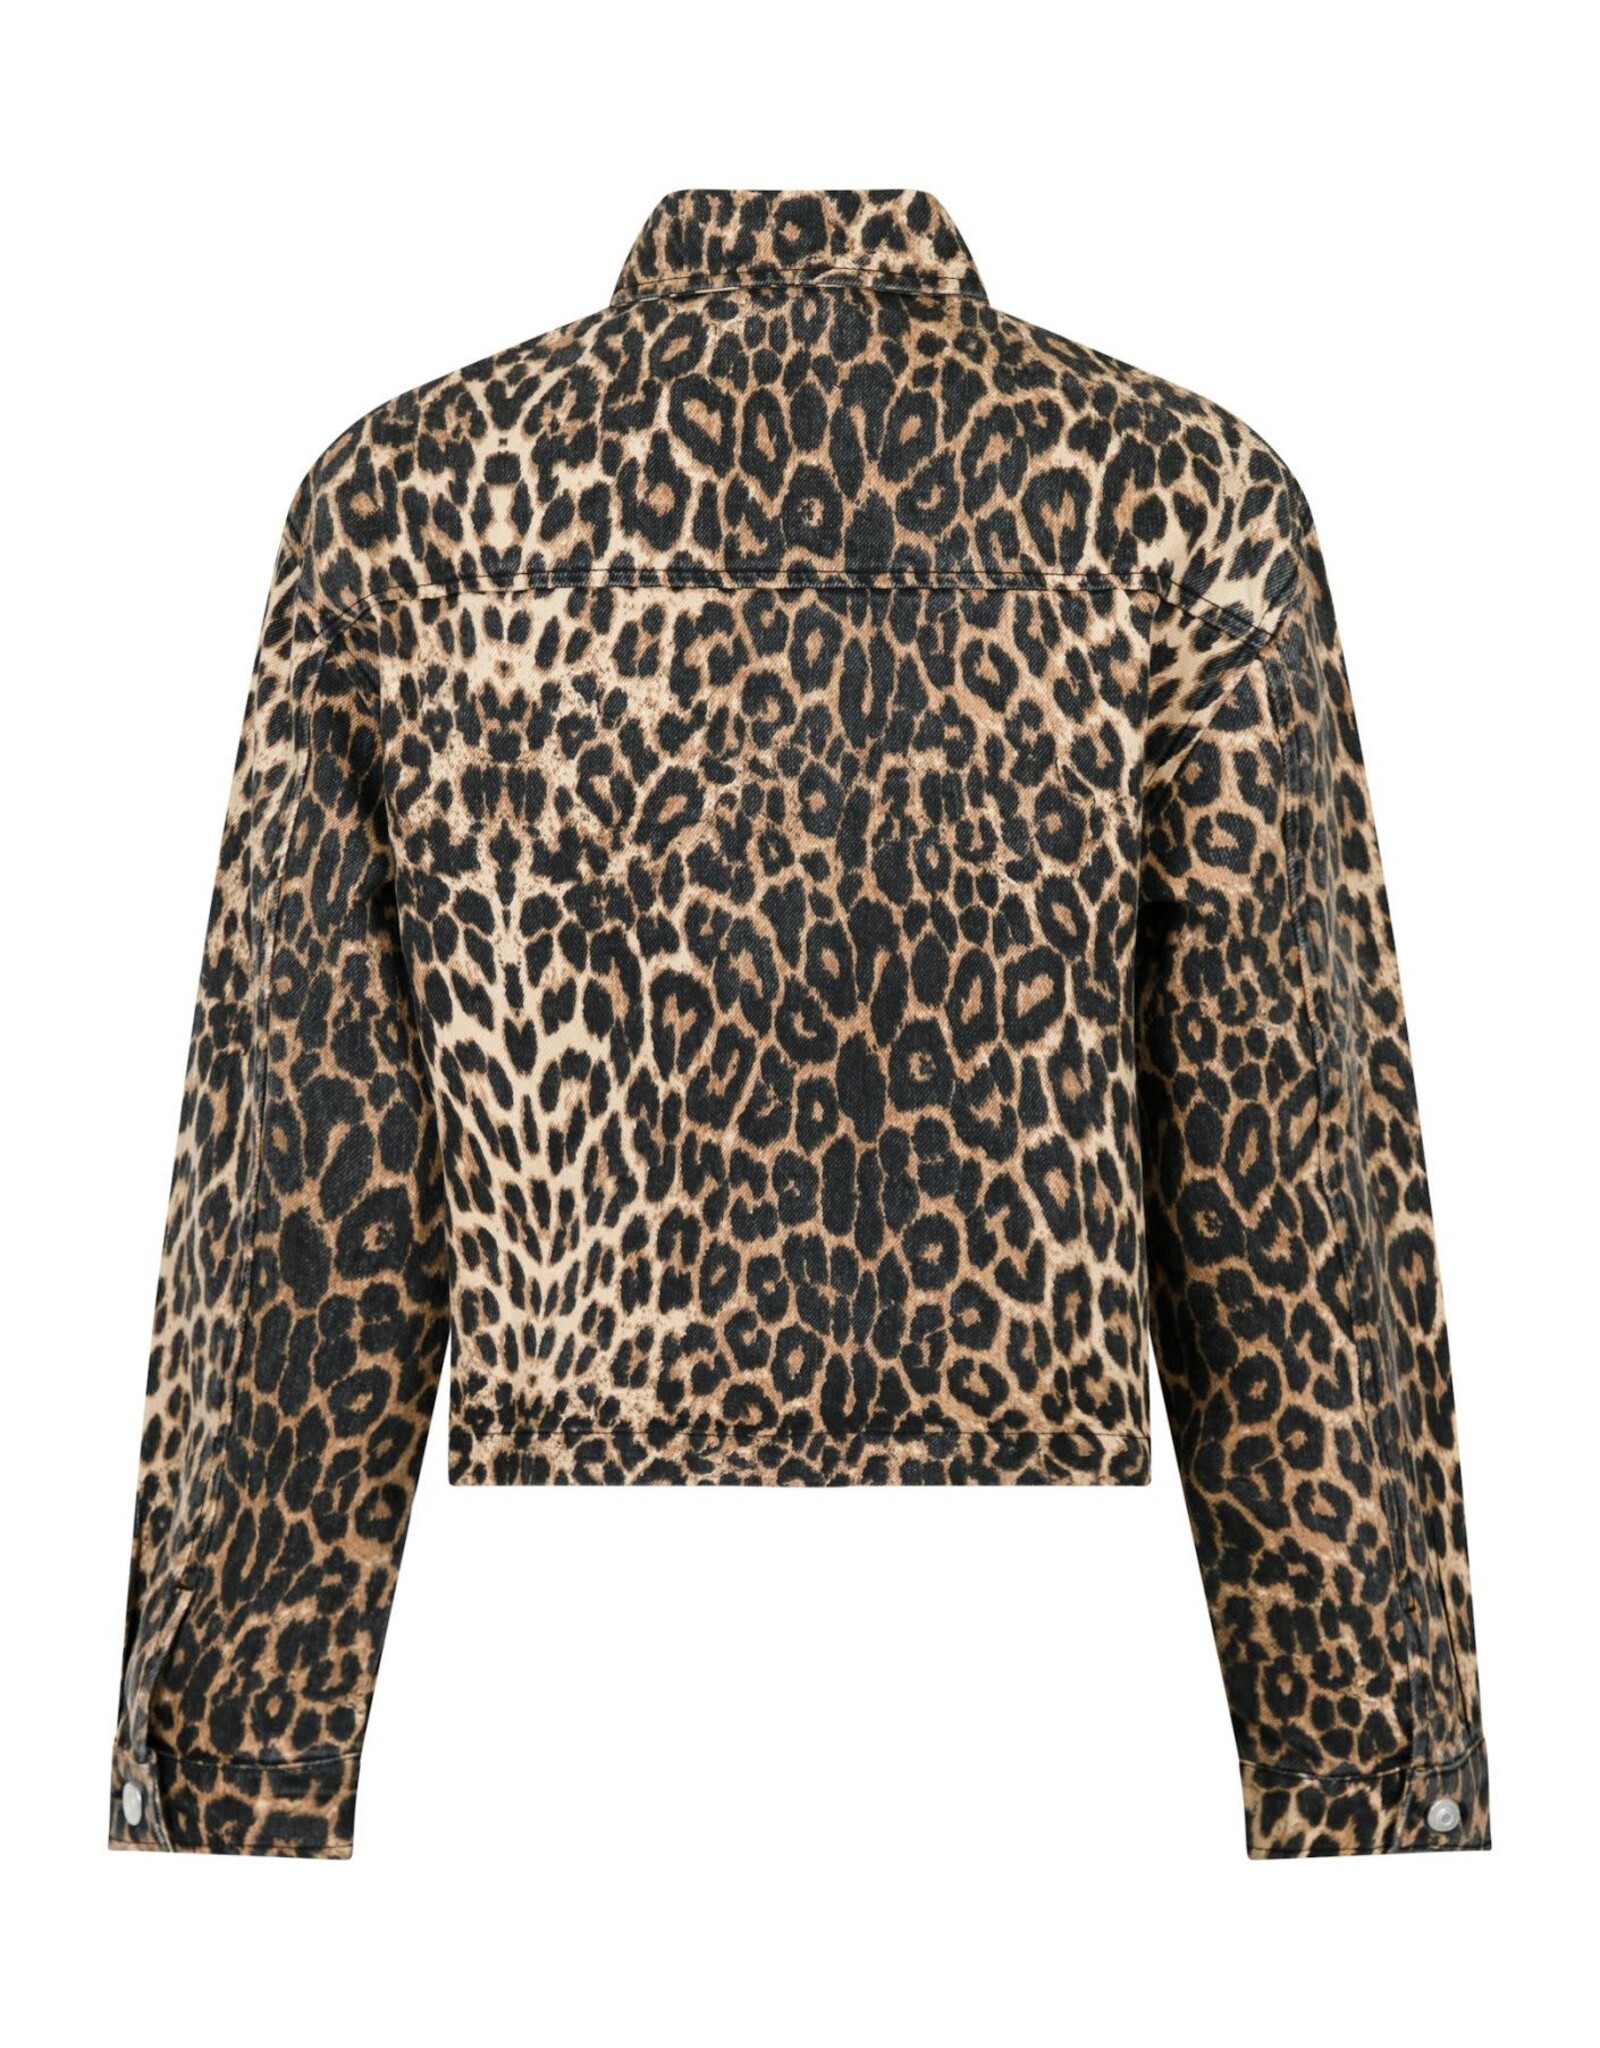 Jacket 'Emilia' - Leopard - Neo Noir